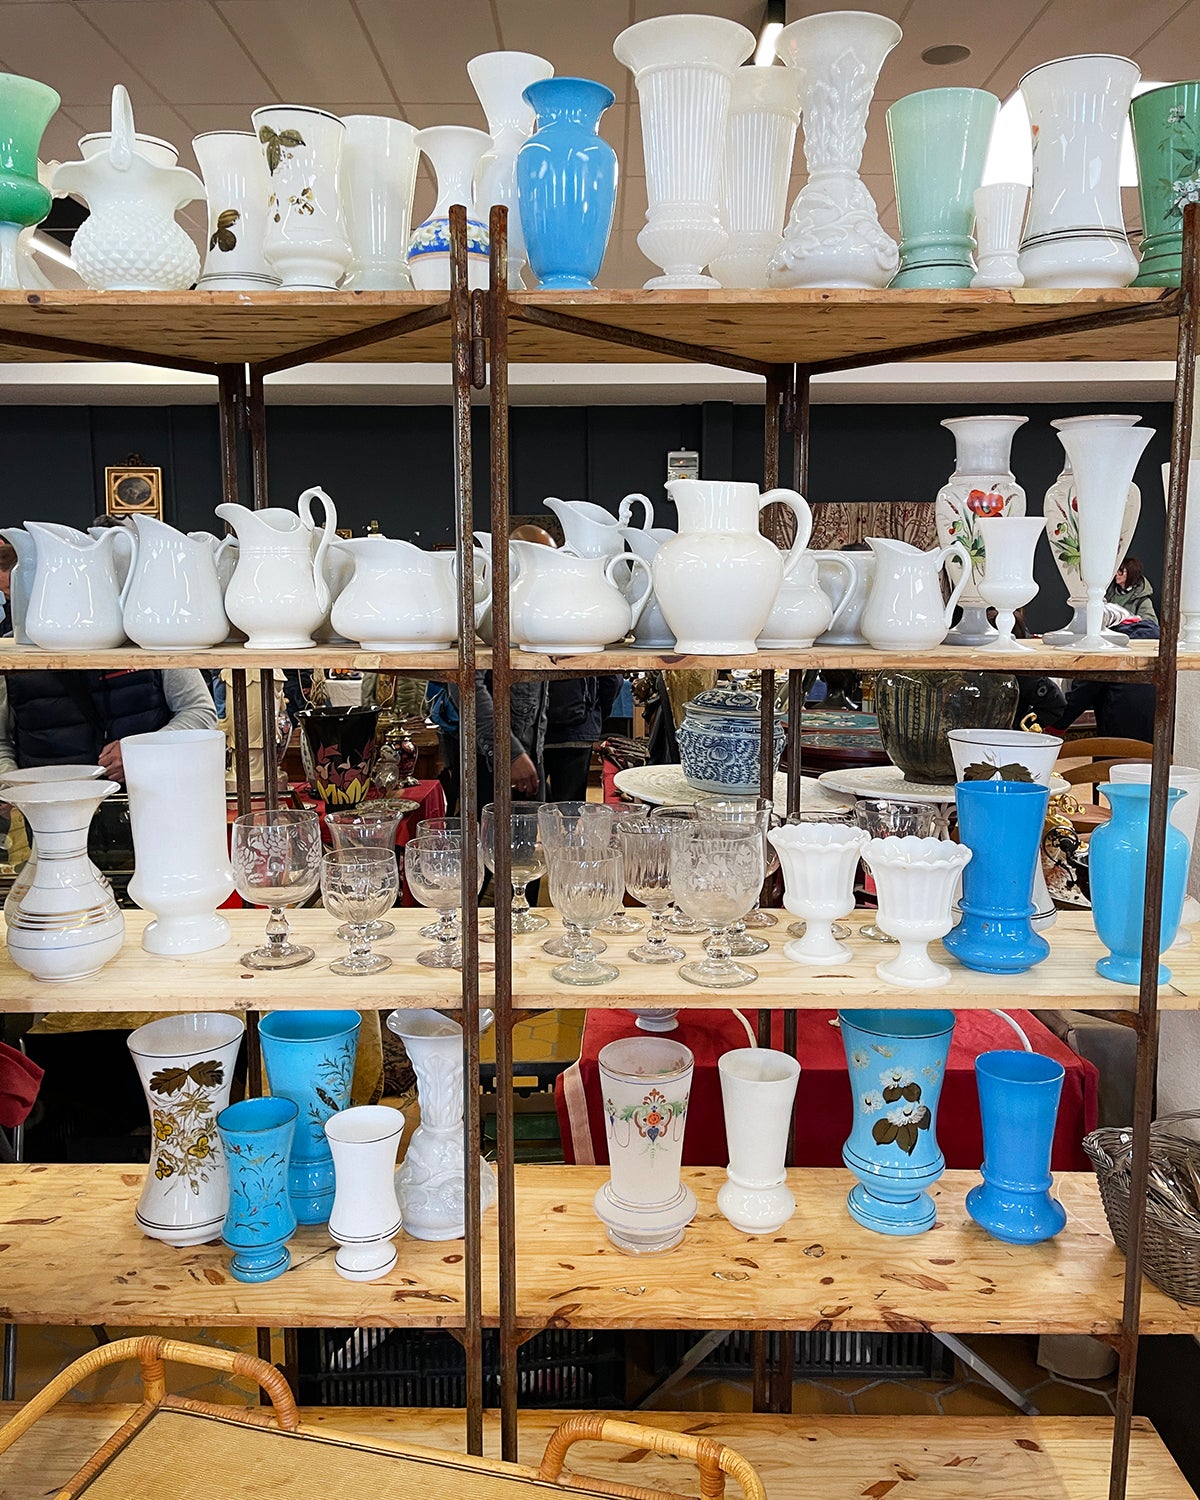 Glassware at a flea market